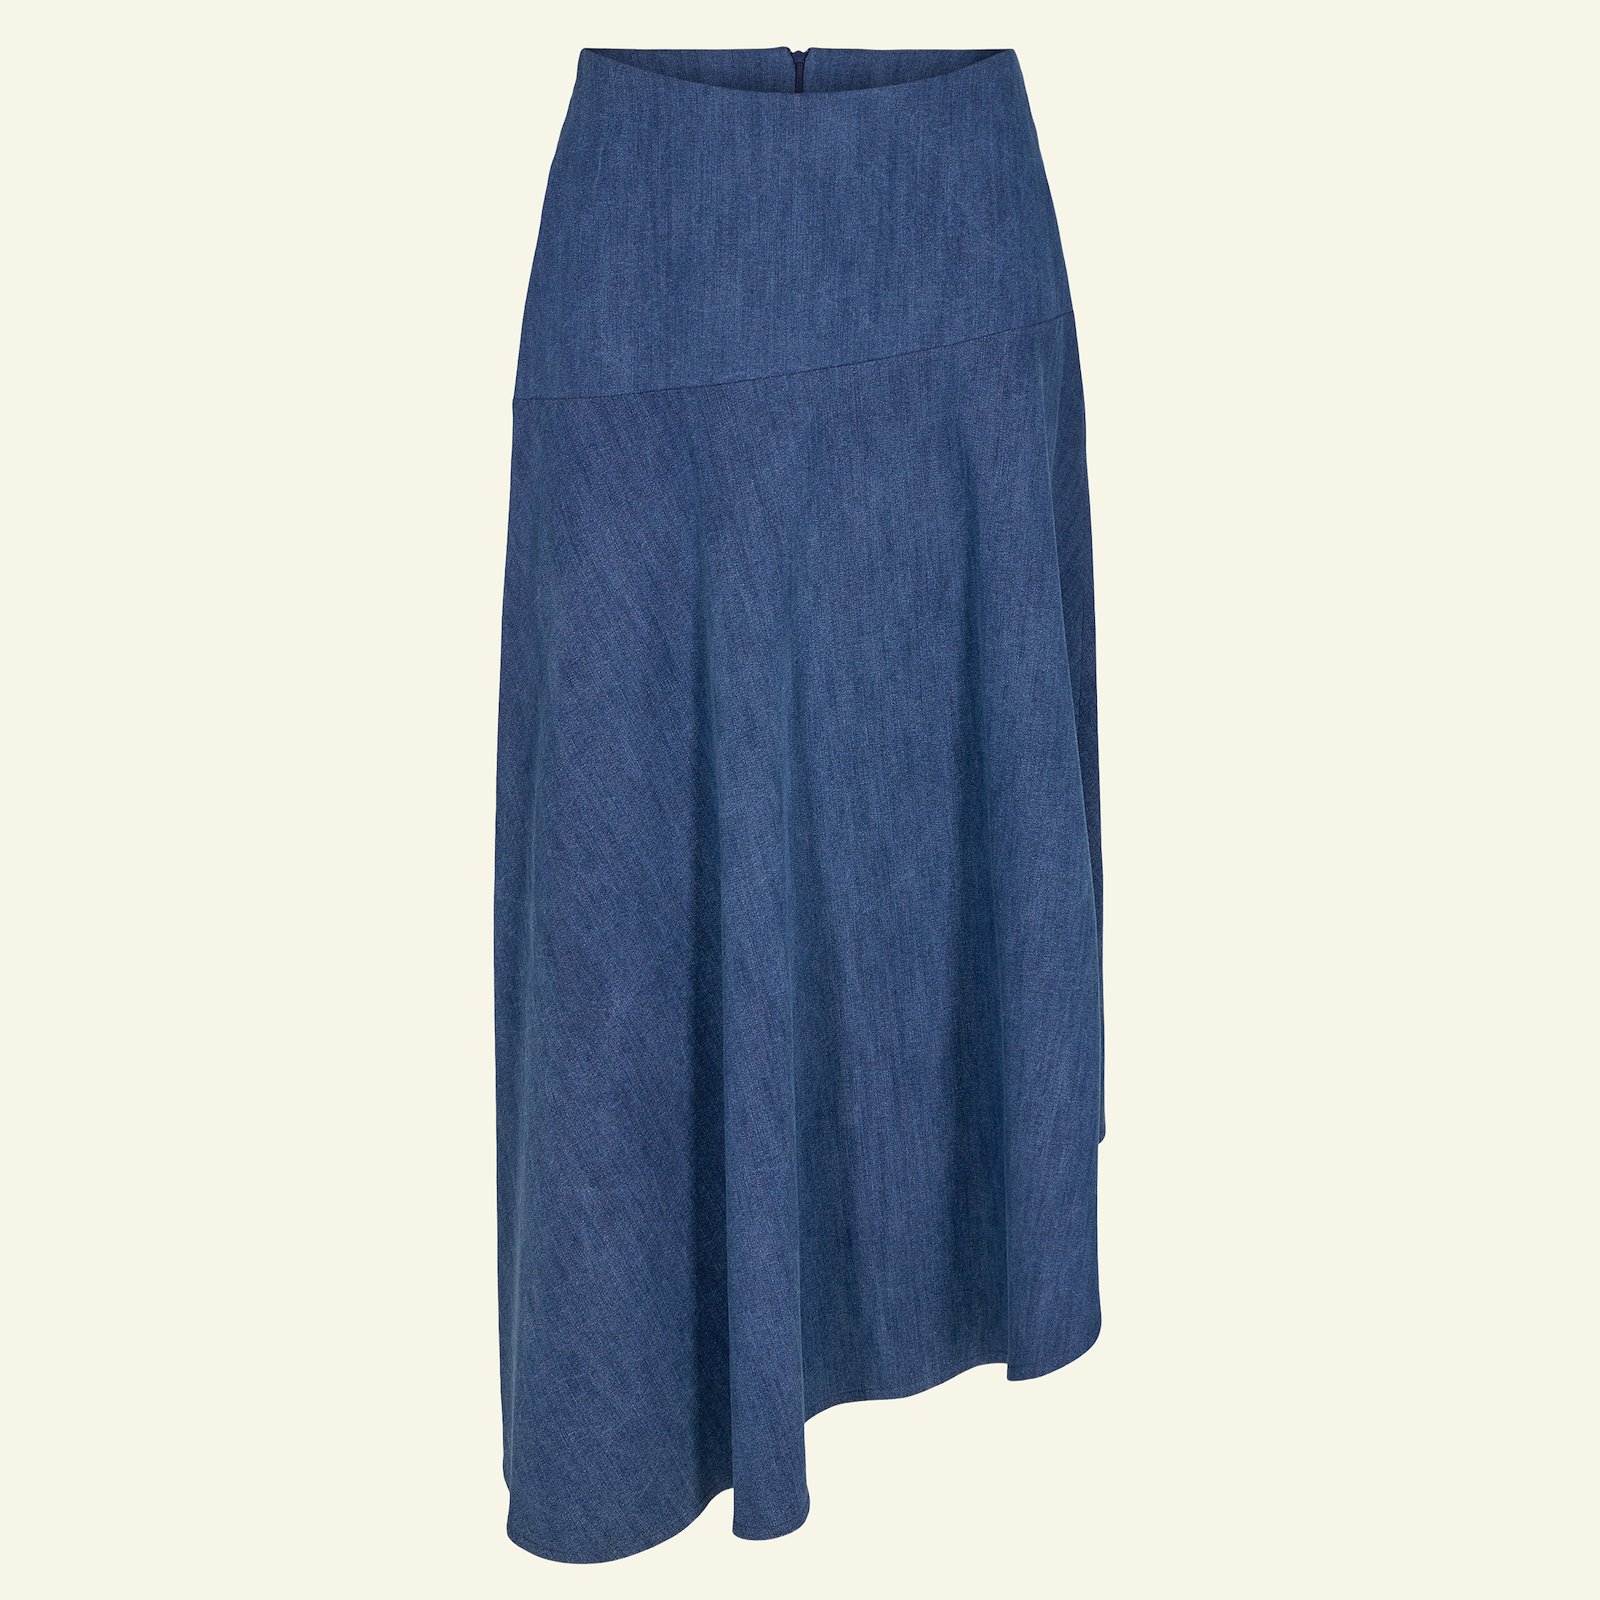 Asymmetric skirt, 46/18 p21041_460851_sskit